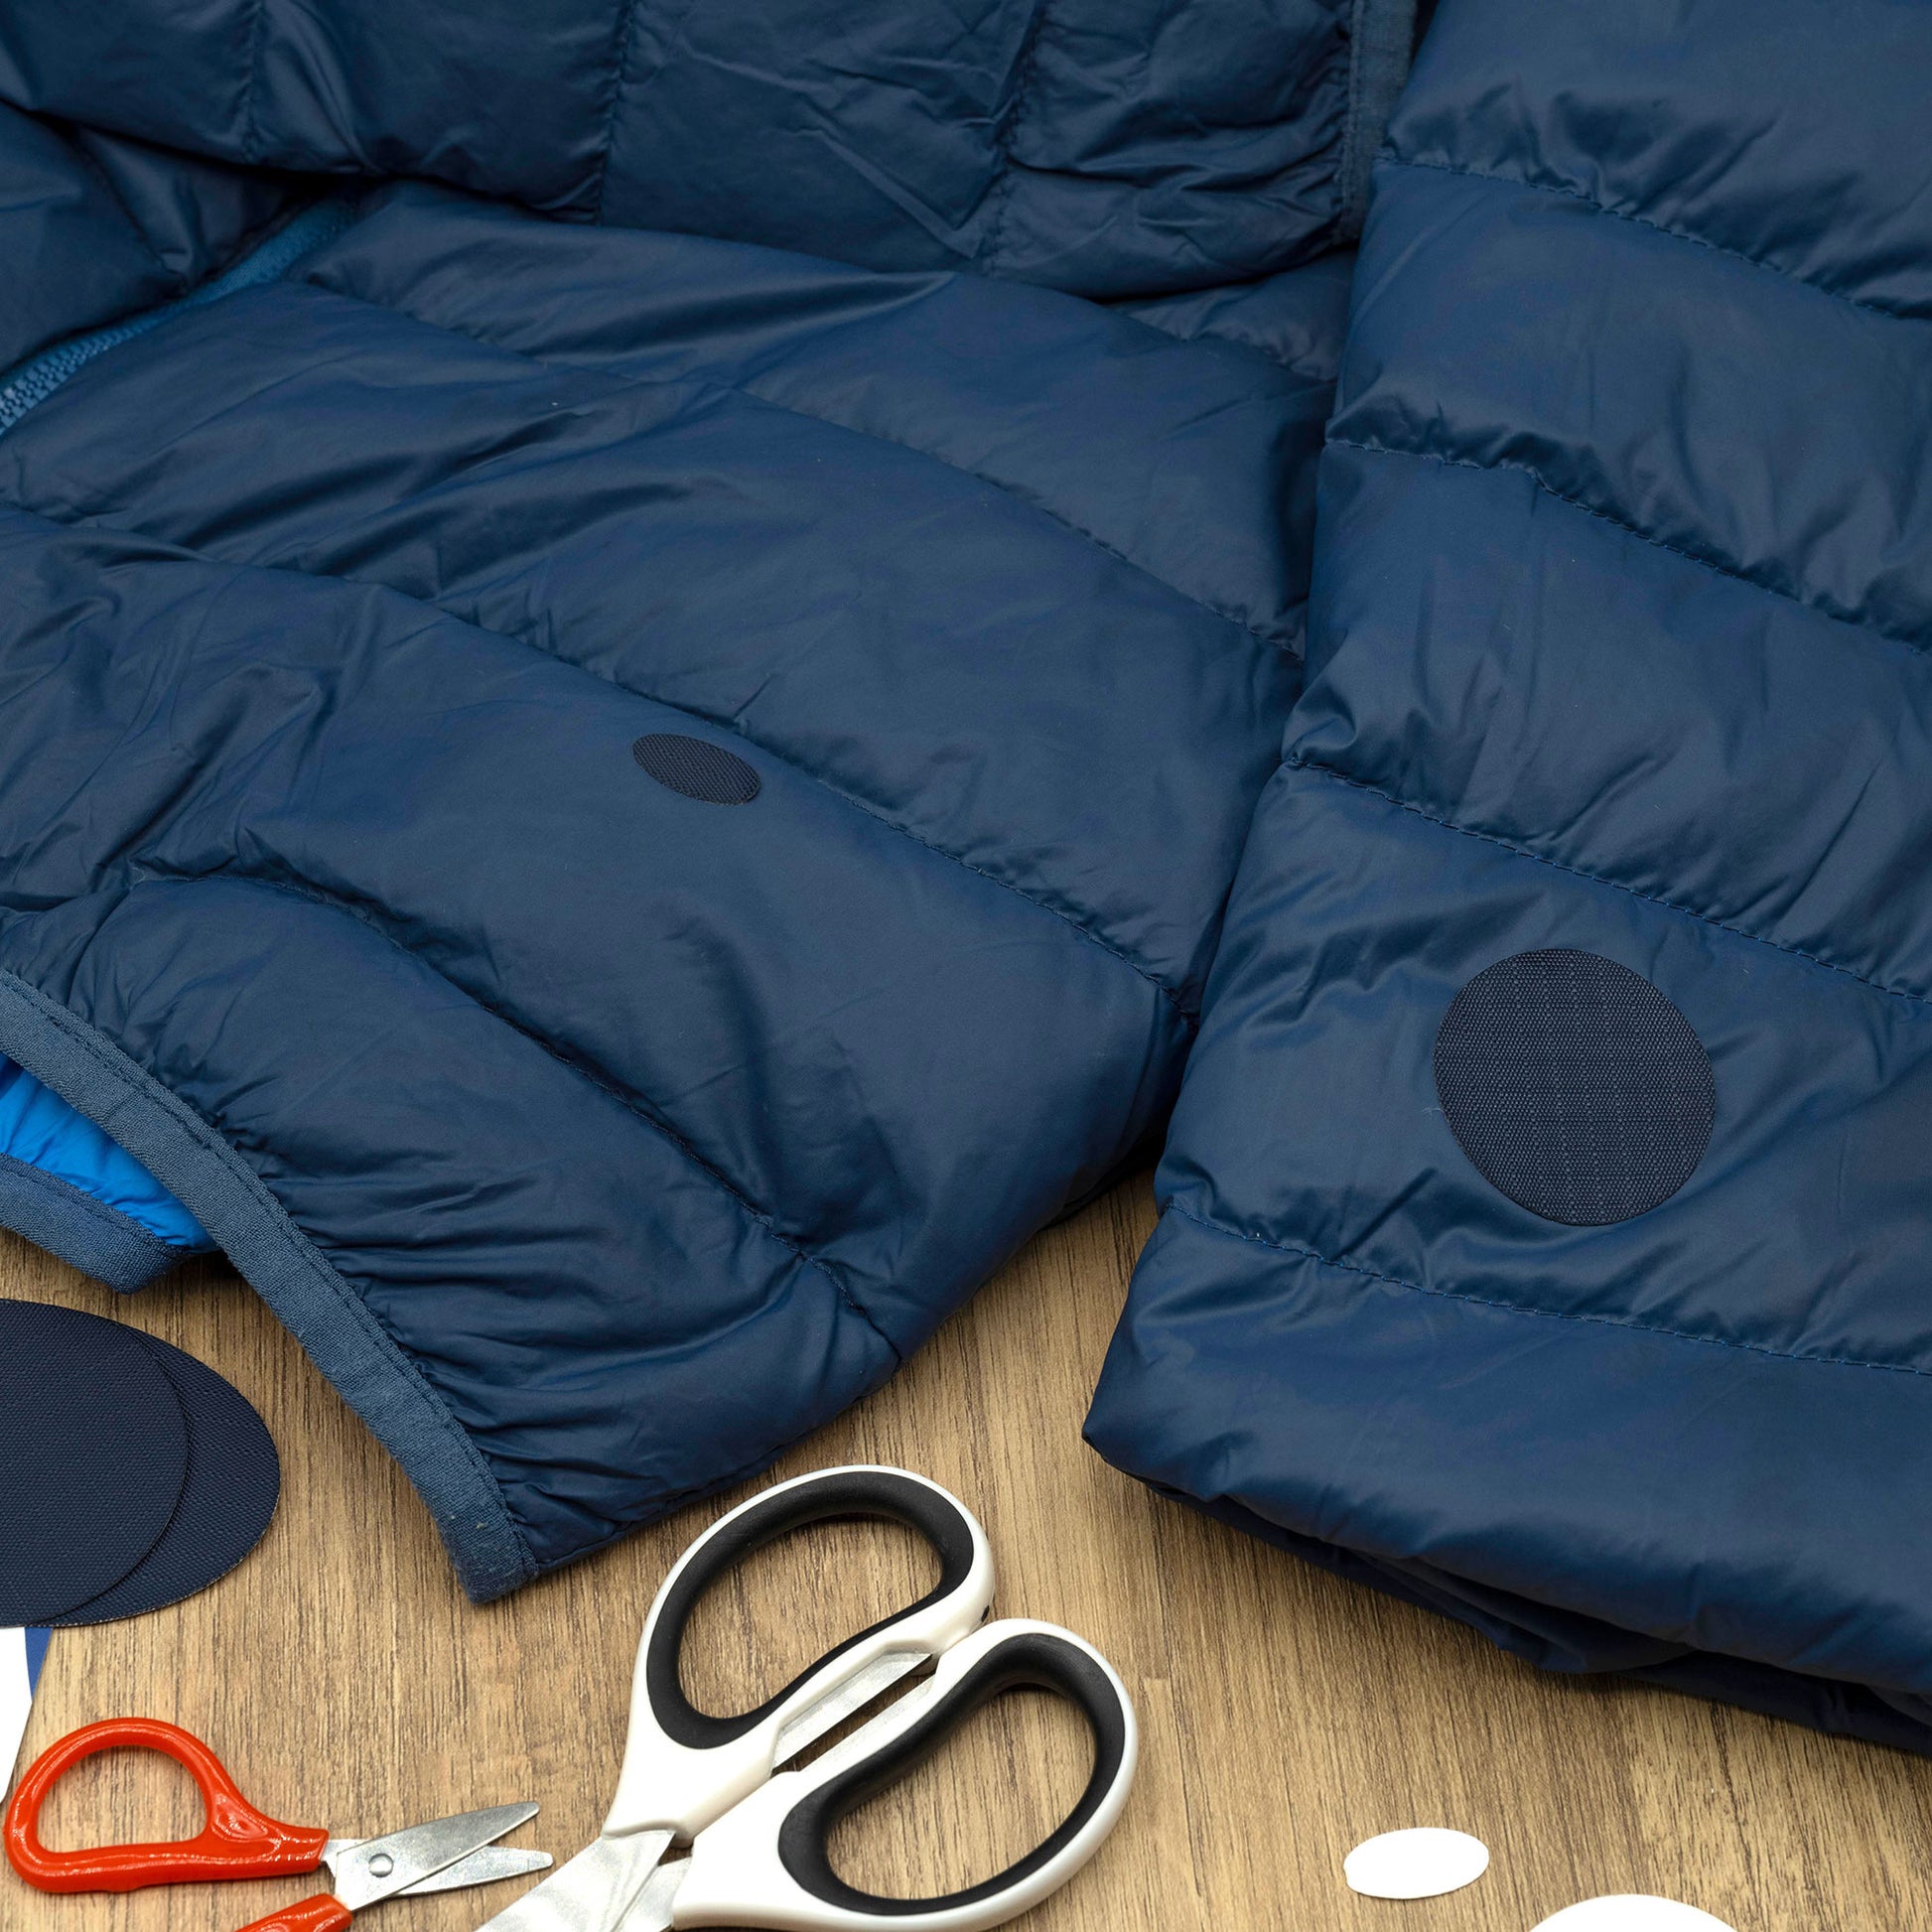 Waterproof, Tear-Resistant Rip-Stop Nylon Fabric to Fix Holes in Clothing, Sleeping Bags, Ski Pants